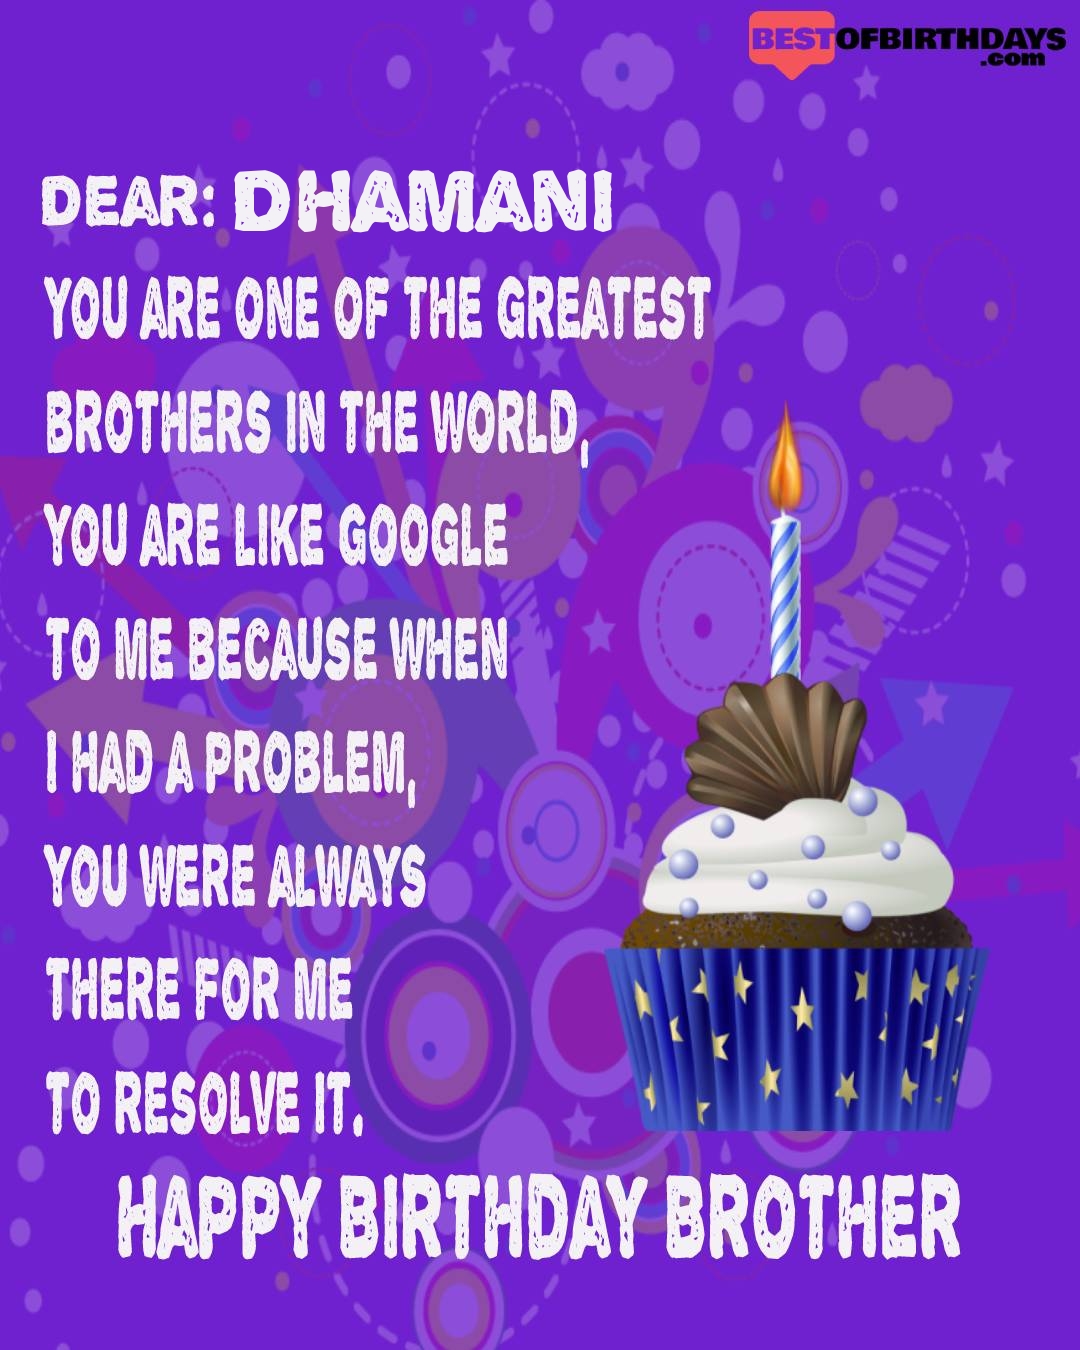 Happy birthday dhamani bhai brother bro